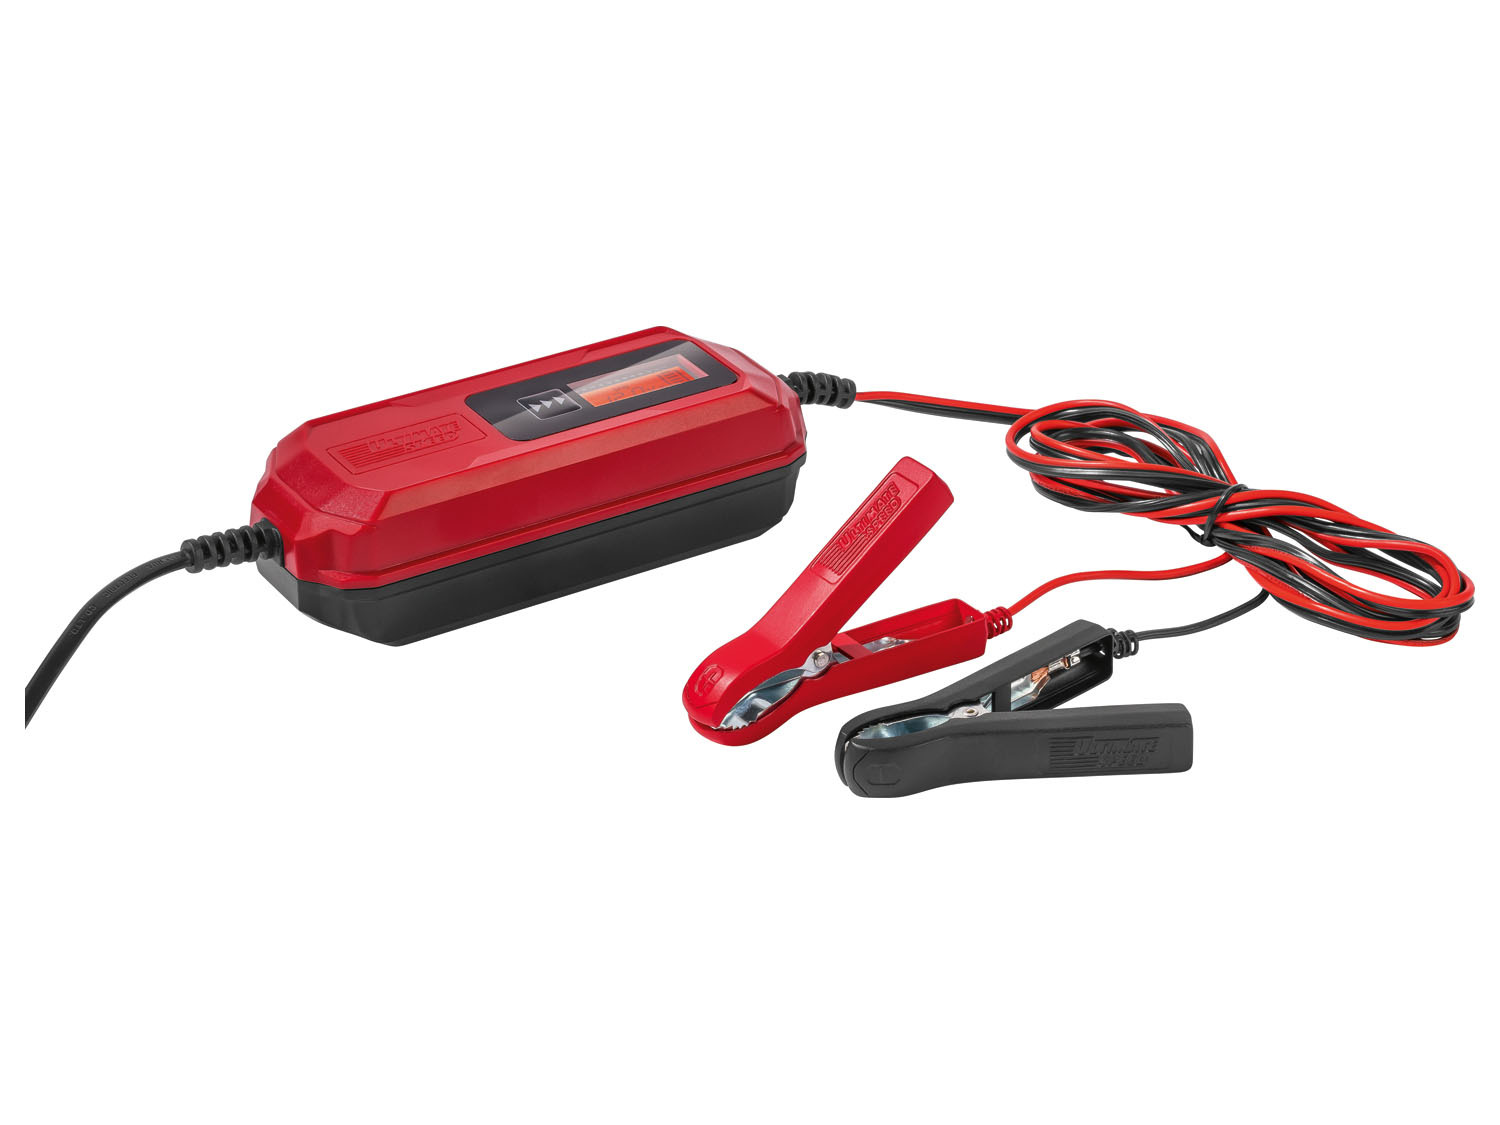 ULTIMATE SPEED® Chargeur de batterie pour voiture ULGD…